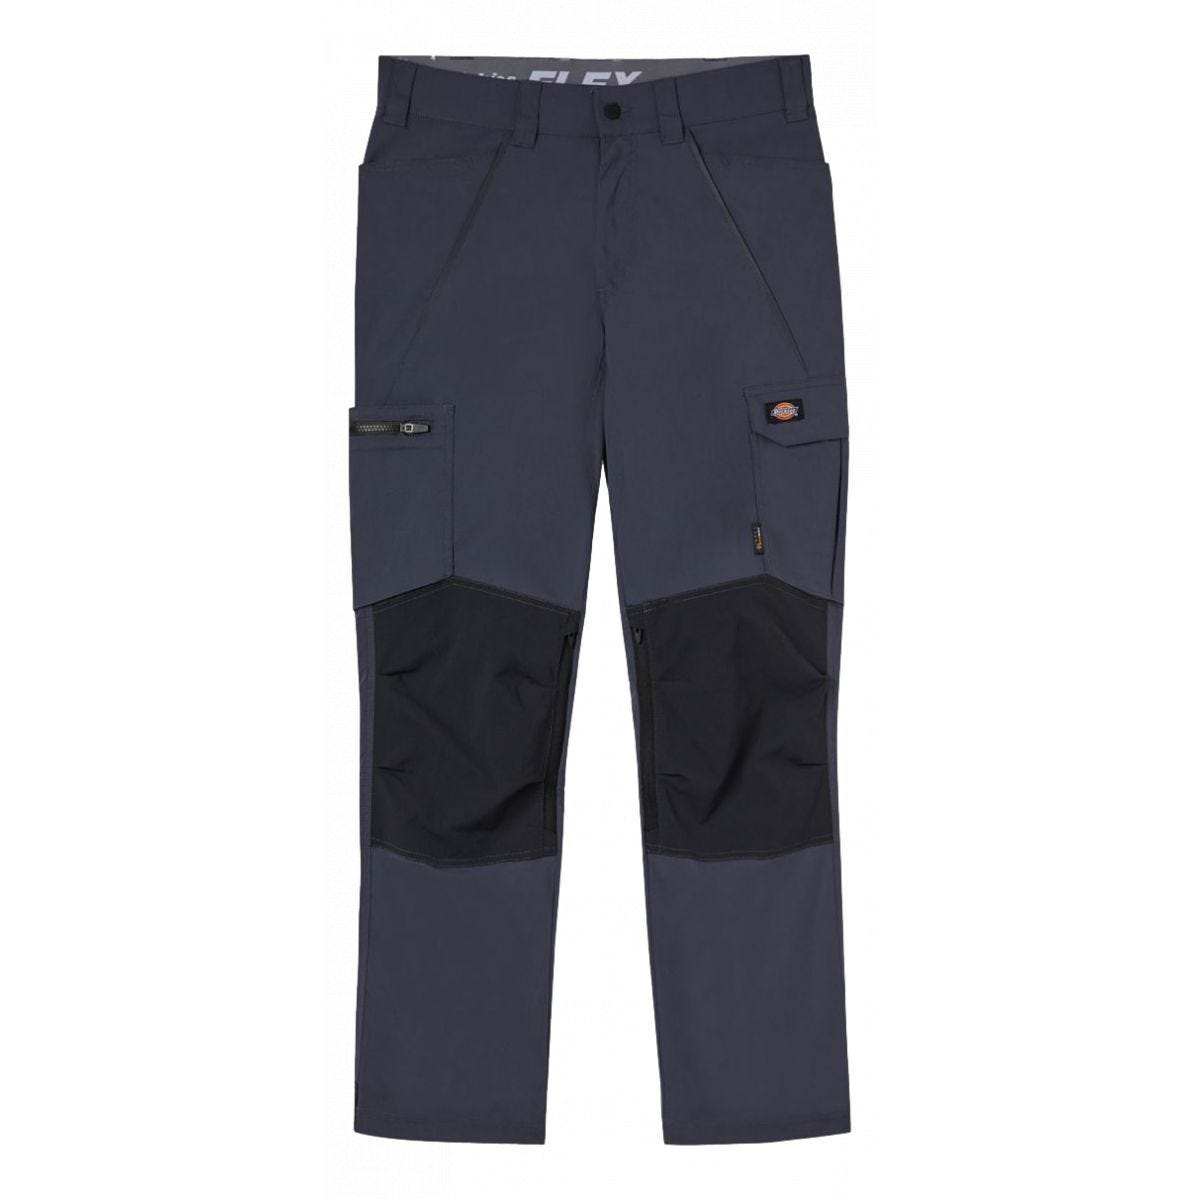 Pantalon léger Flex Gris - Dickies - Taille 44 0